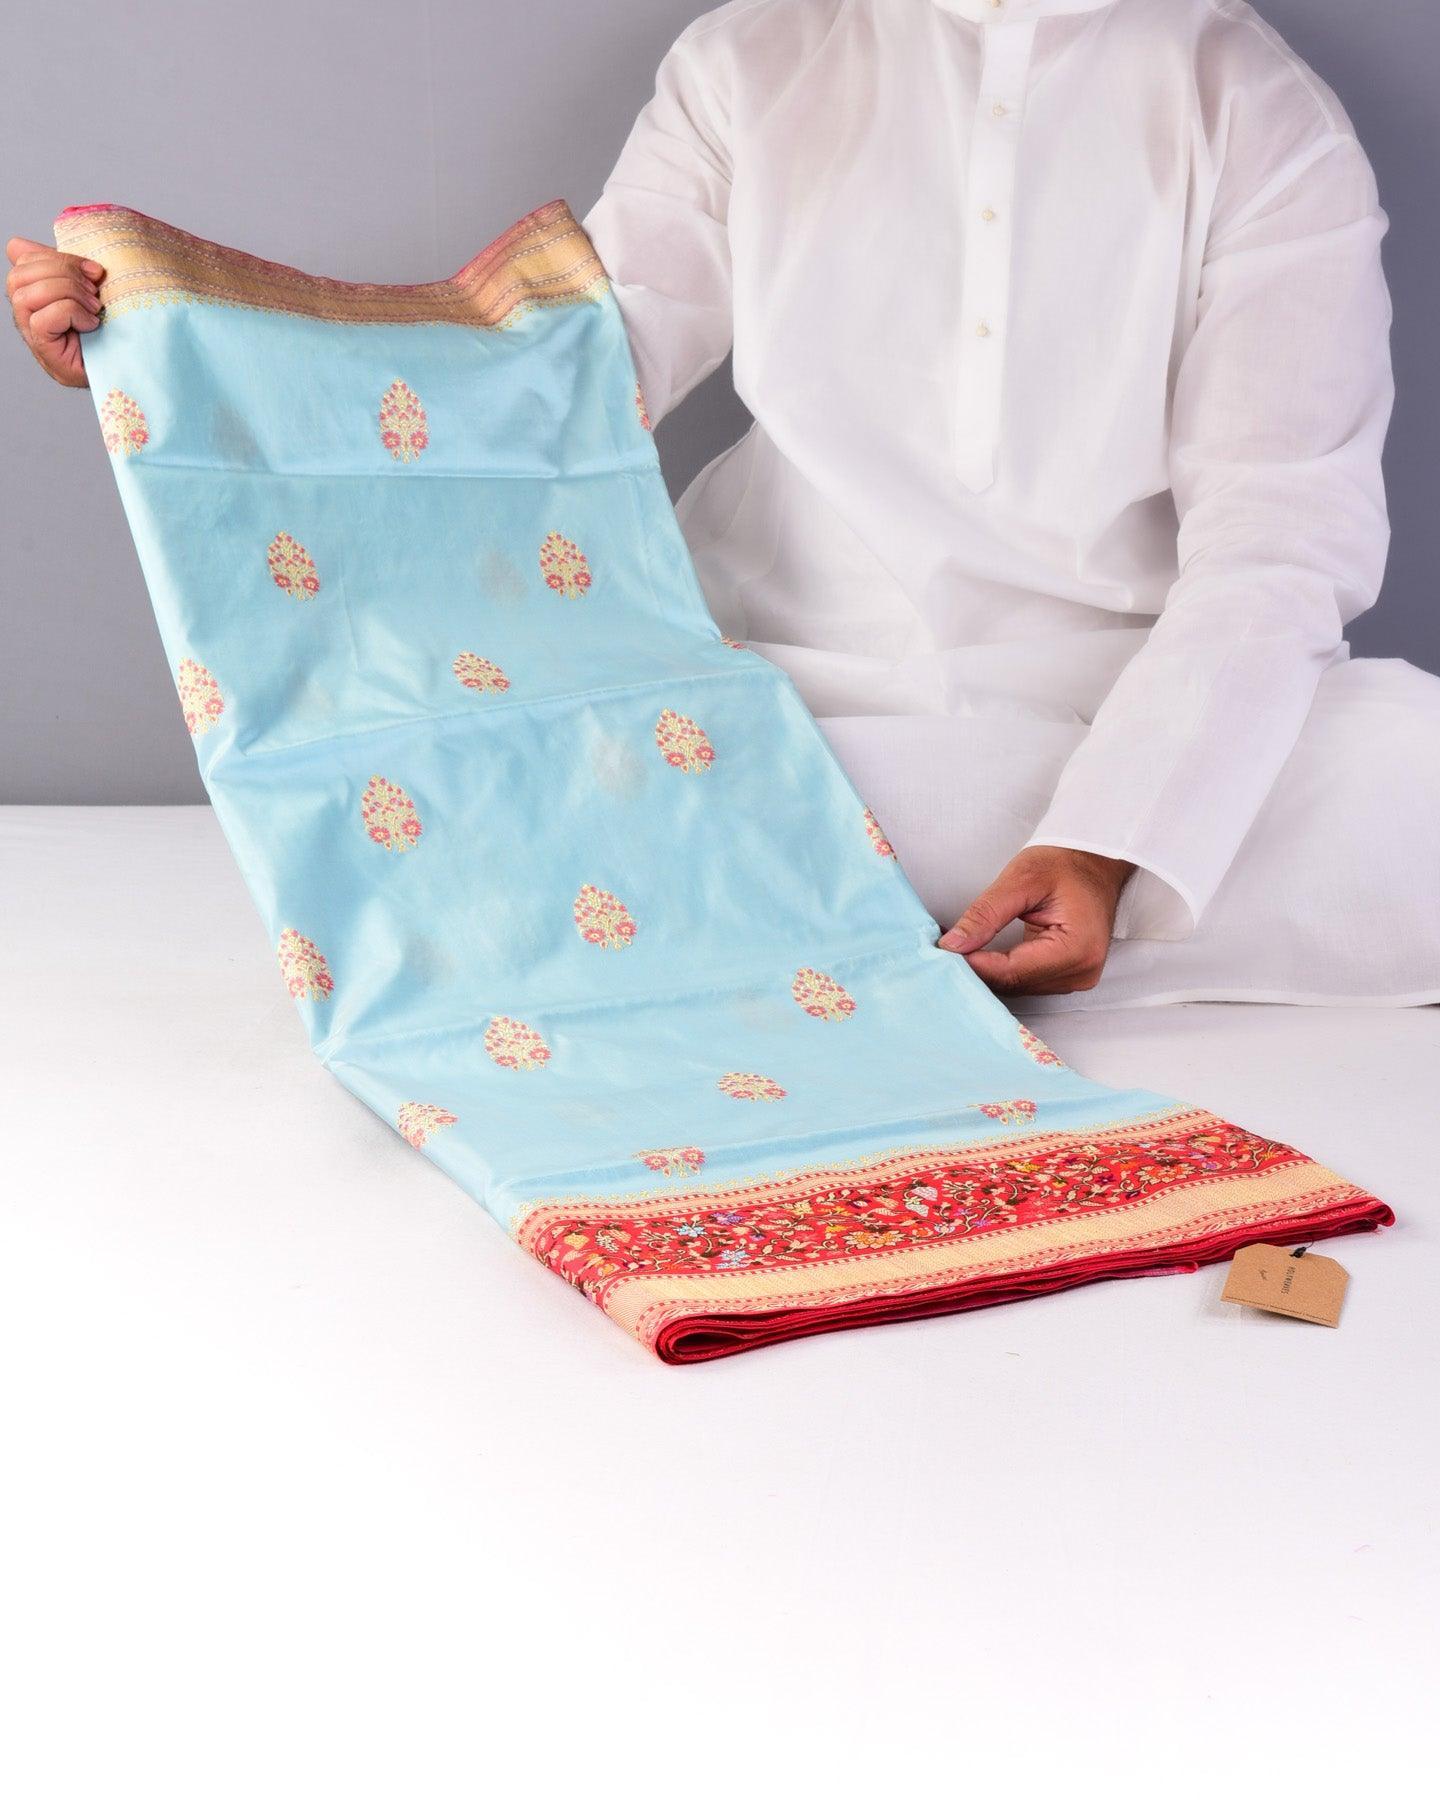 Sky Blue Alfi Buti Kadhuan Brocade Handwoven Katan Silk Saree with Meenekari Border Pallu - By HolyWeaves, Benares